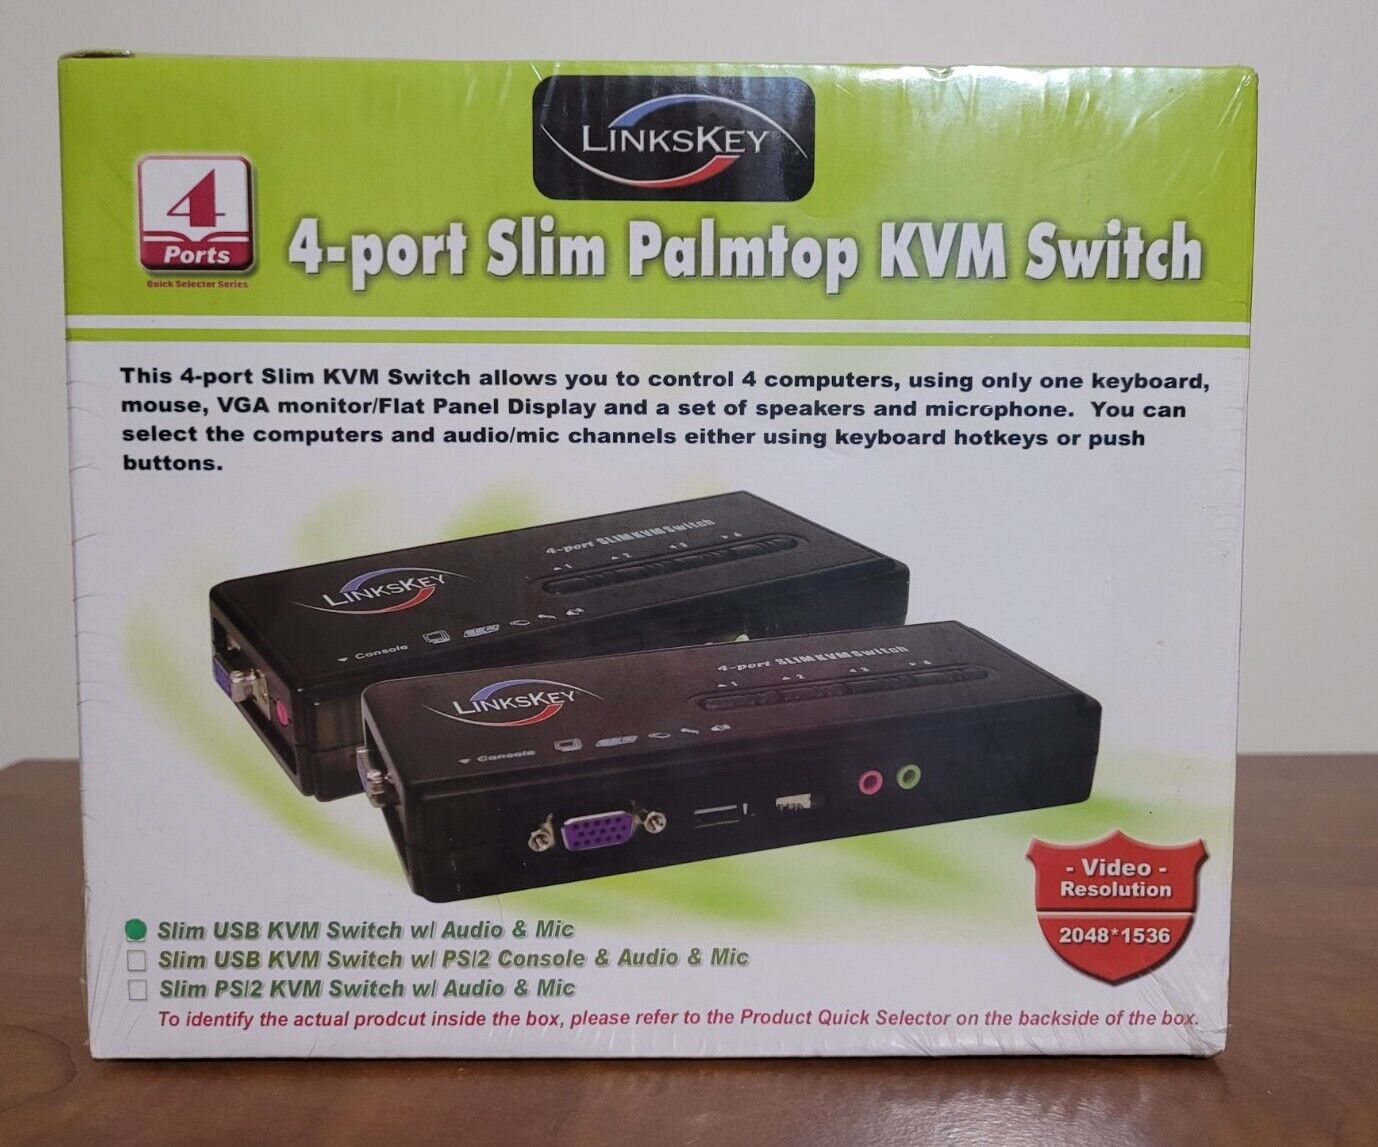 Linkskey LKU-S04ASK 4-Port Slim Palmtop KVM Switch